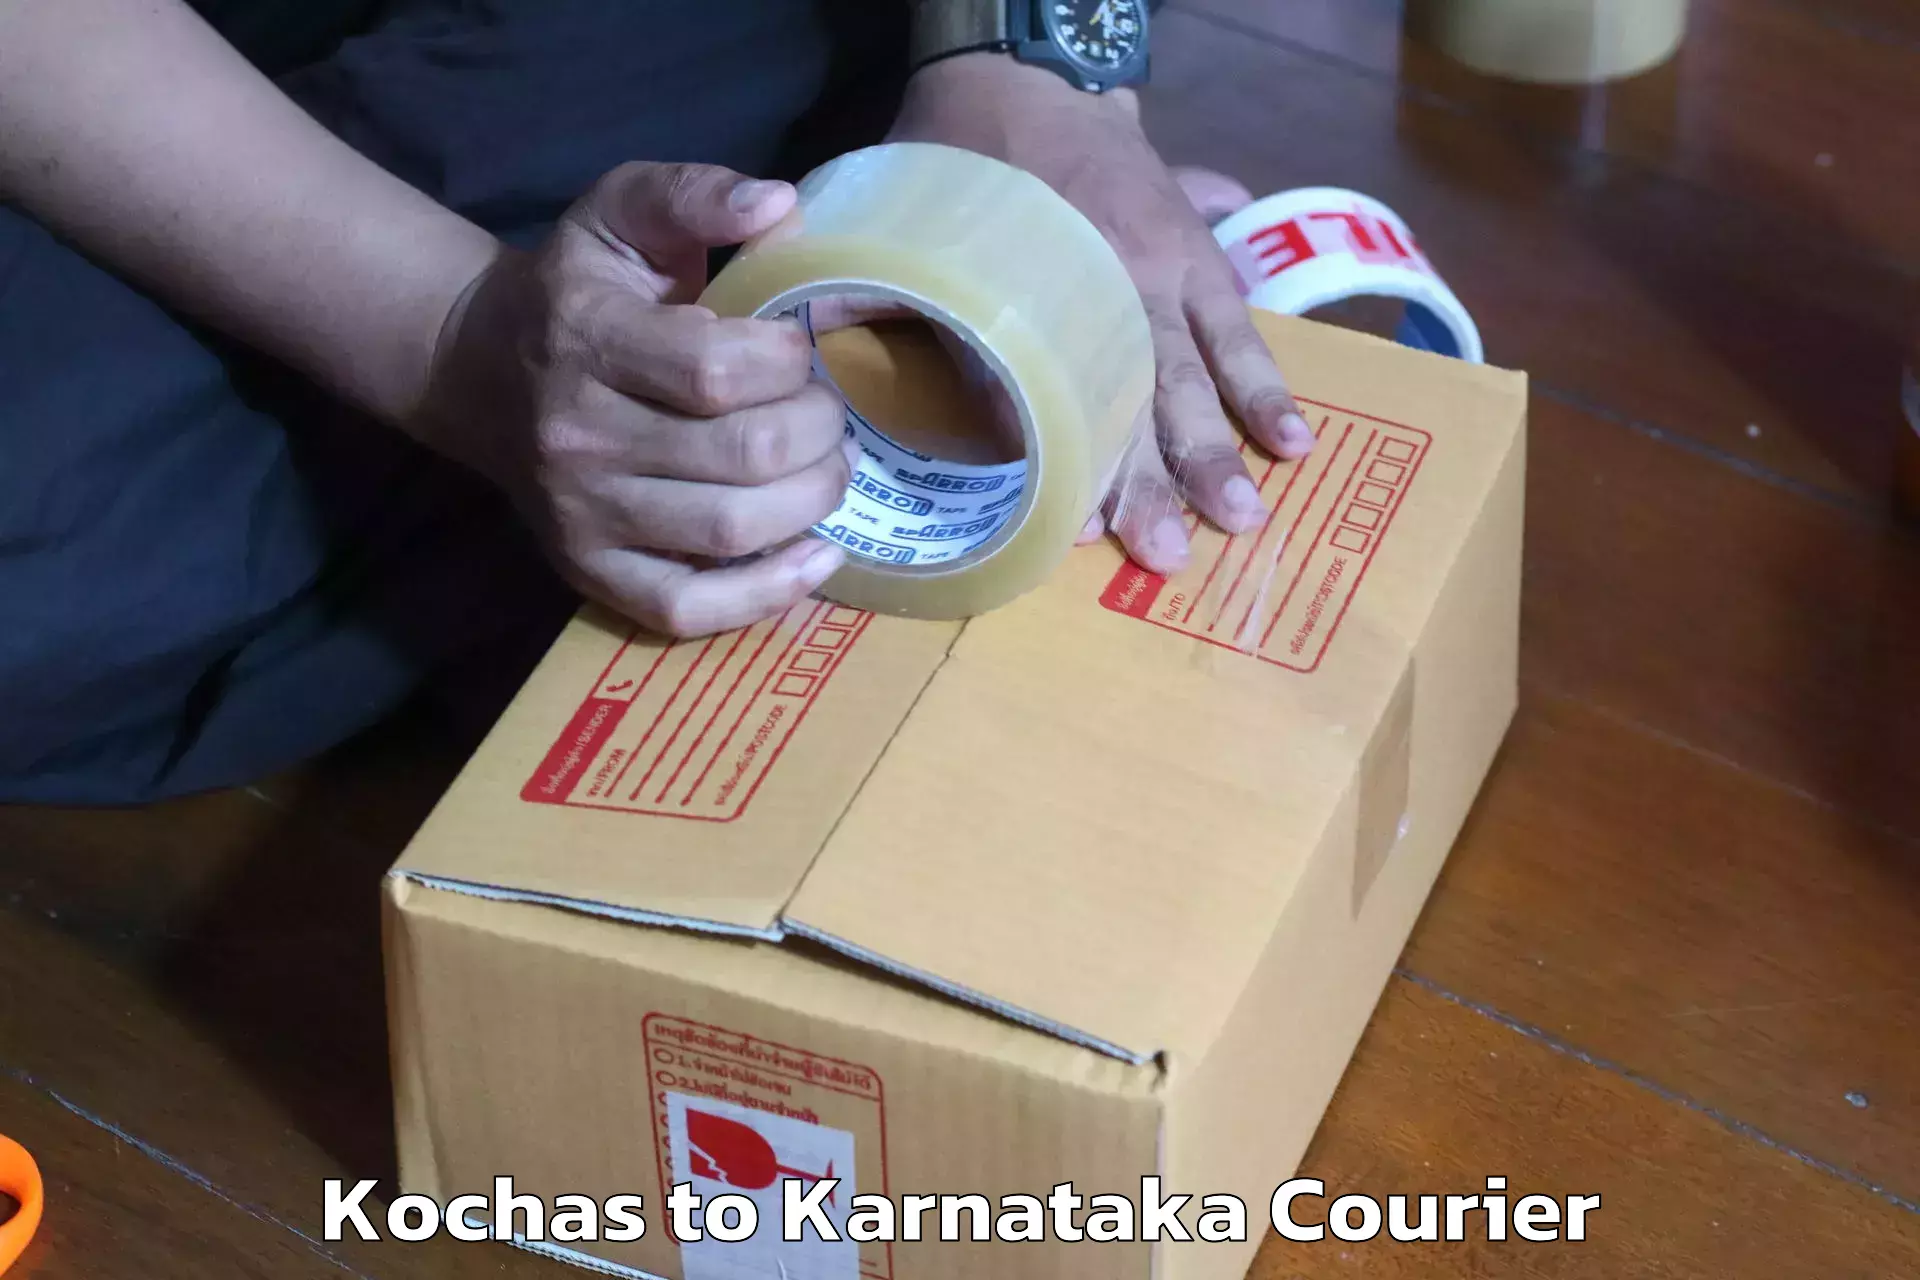 Efficient moving company Kochas to Anavatti